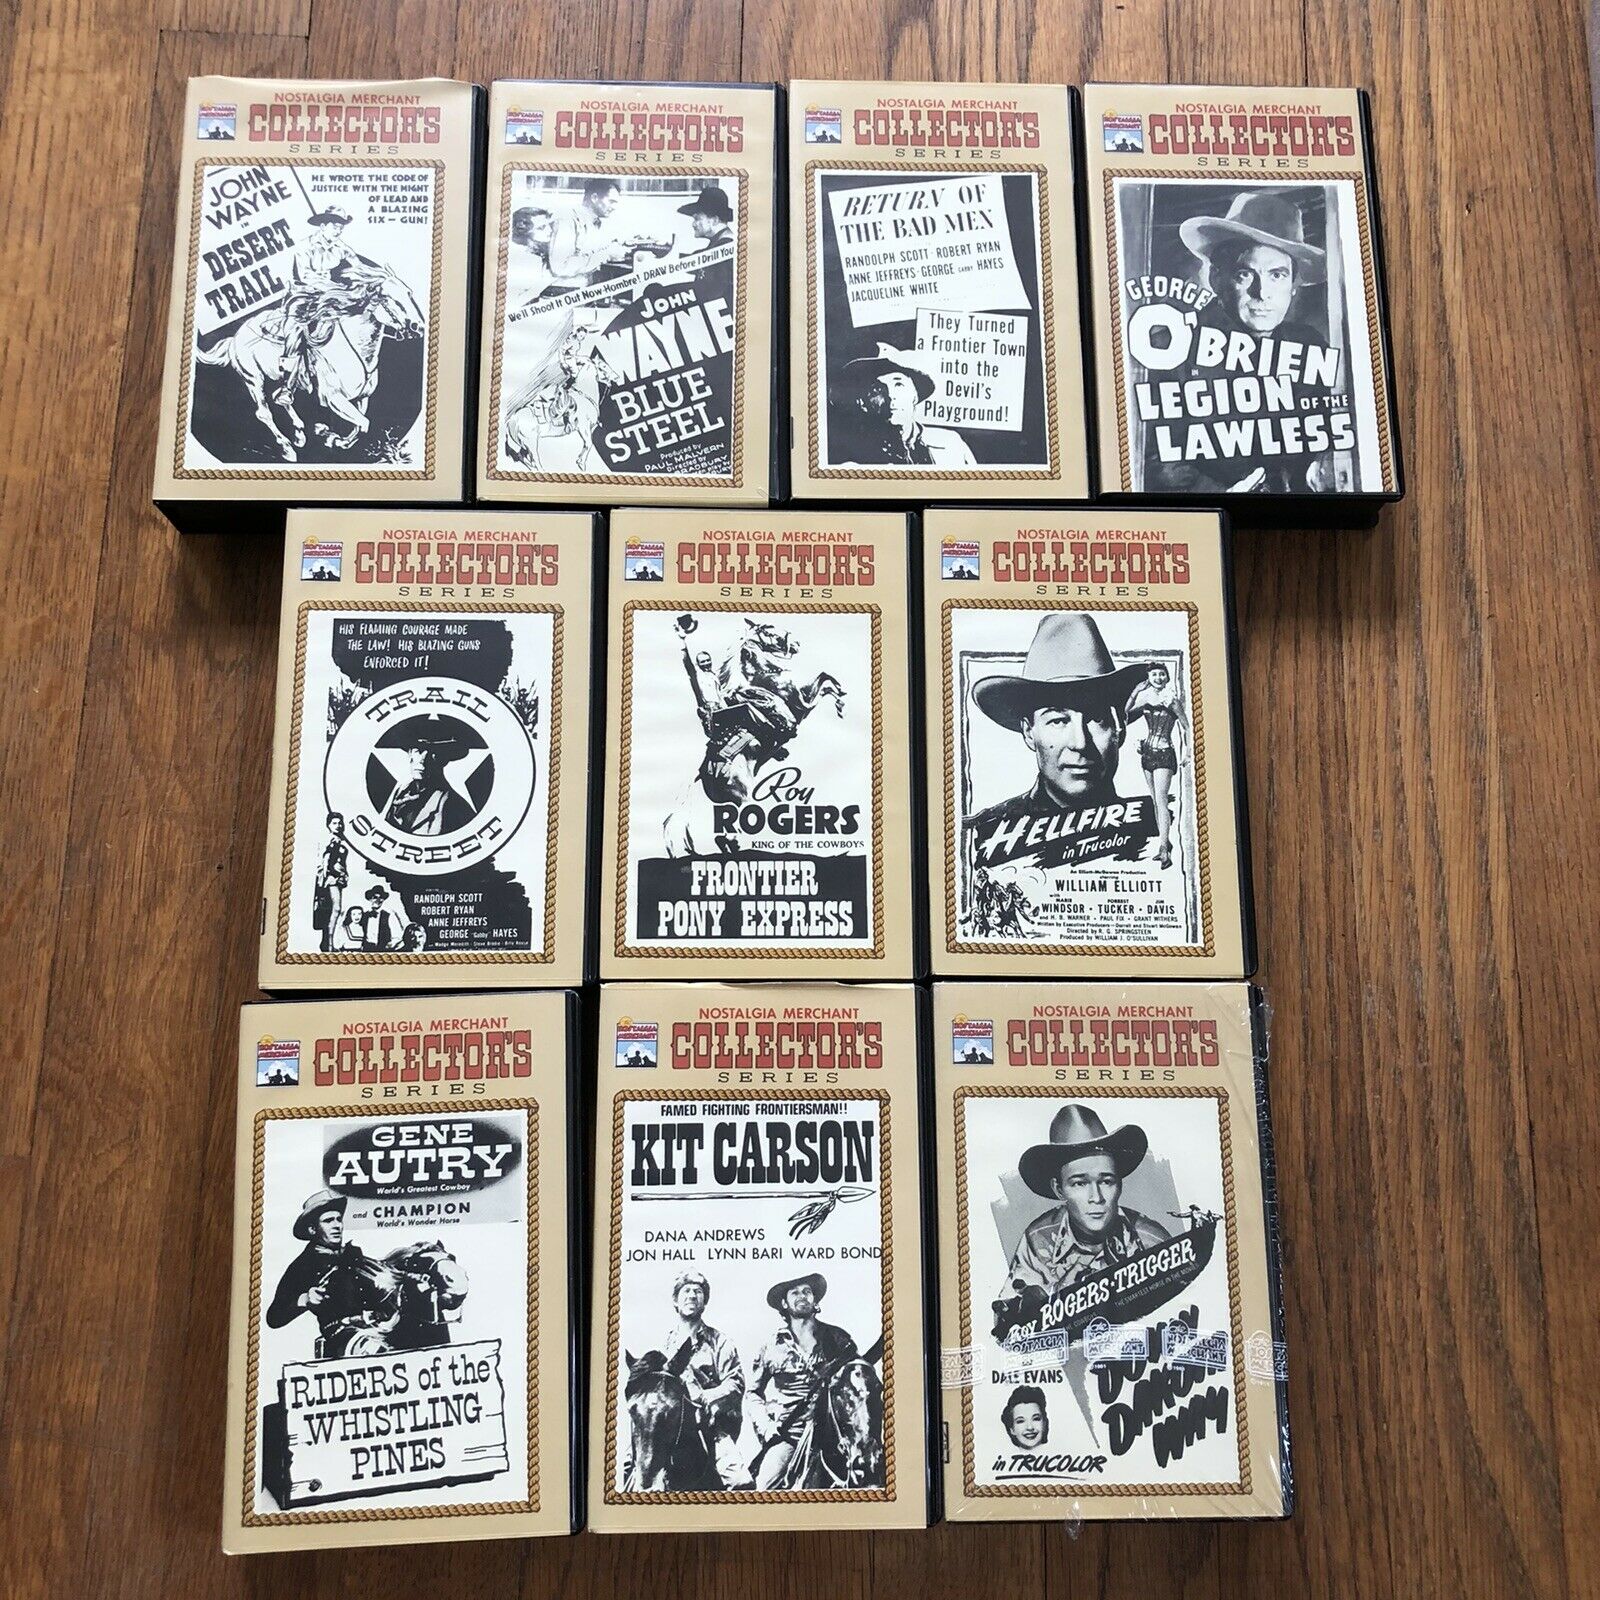 Nostalgia Merchant Collector’s Series Betamax Beta Movie Lot 10 Tapes Westerns